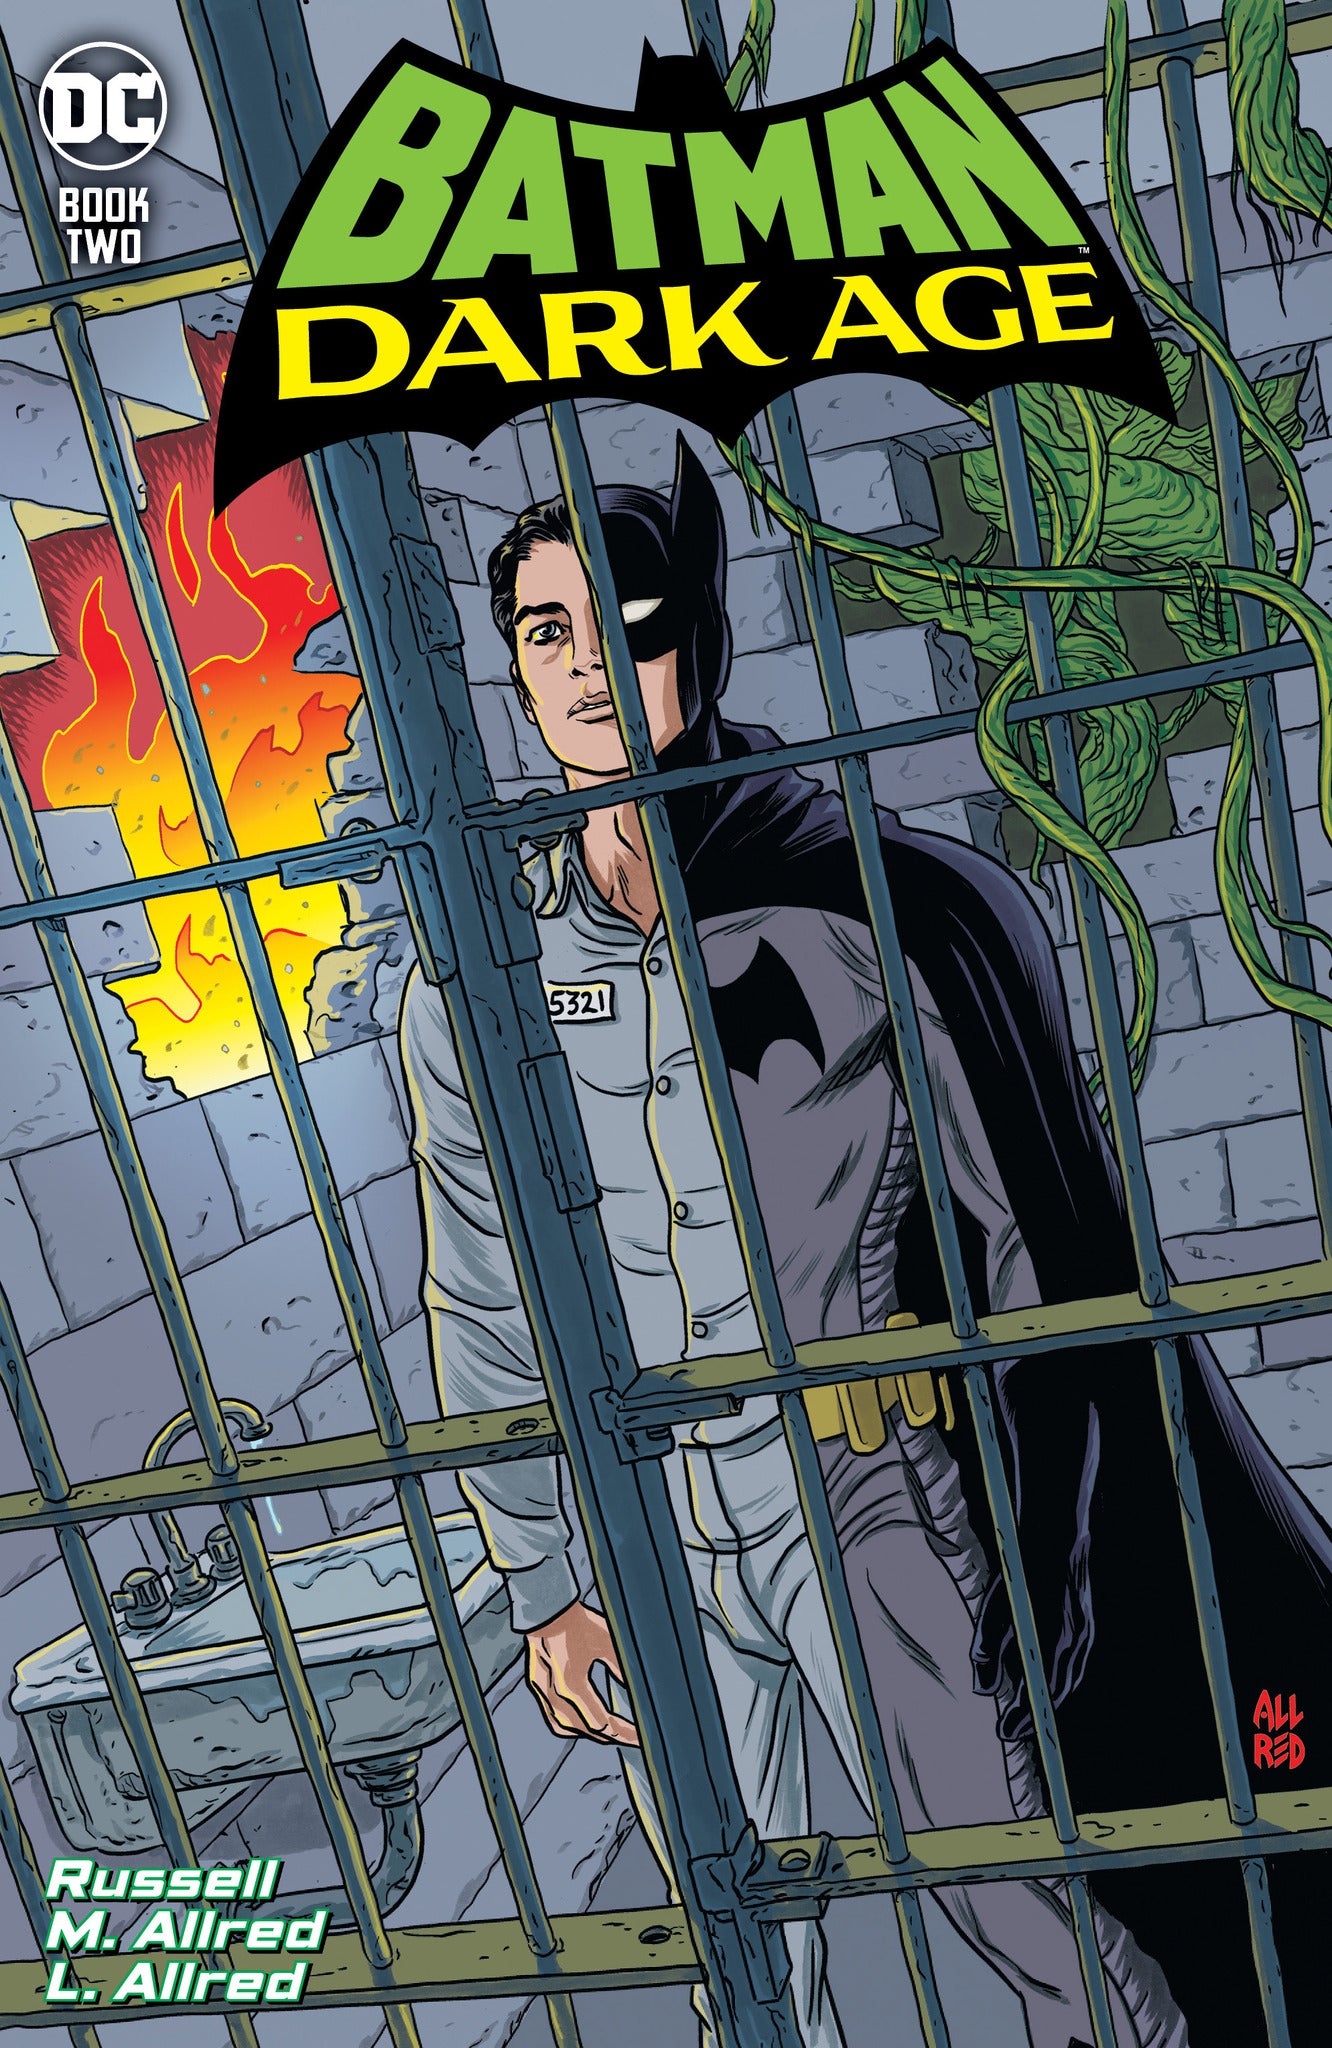 BATMAN: DARK AGE